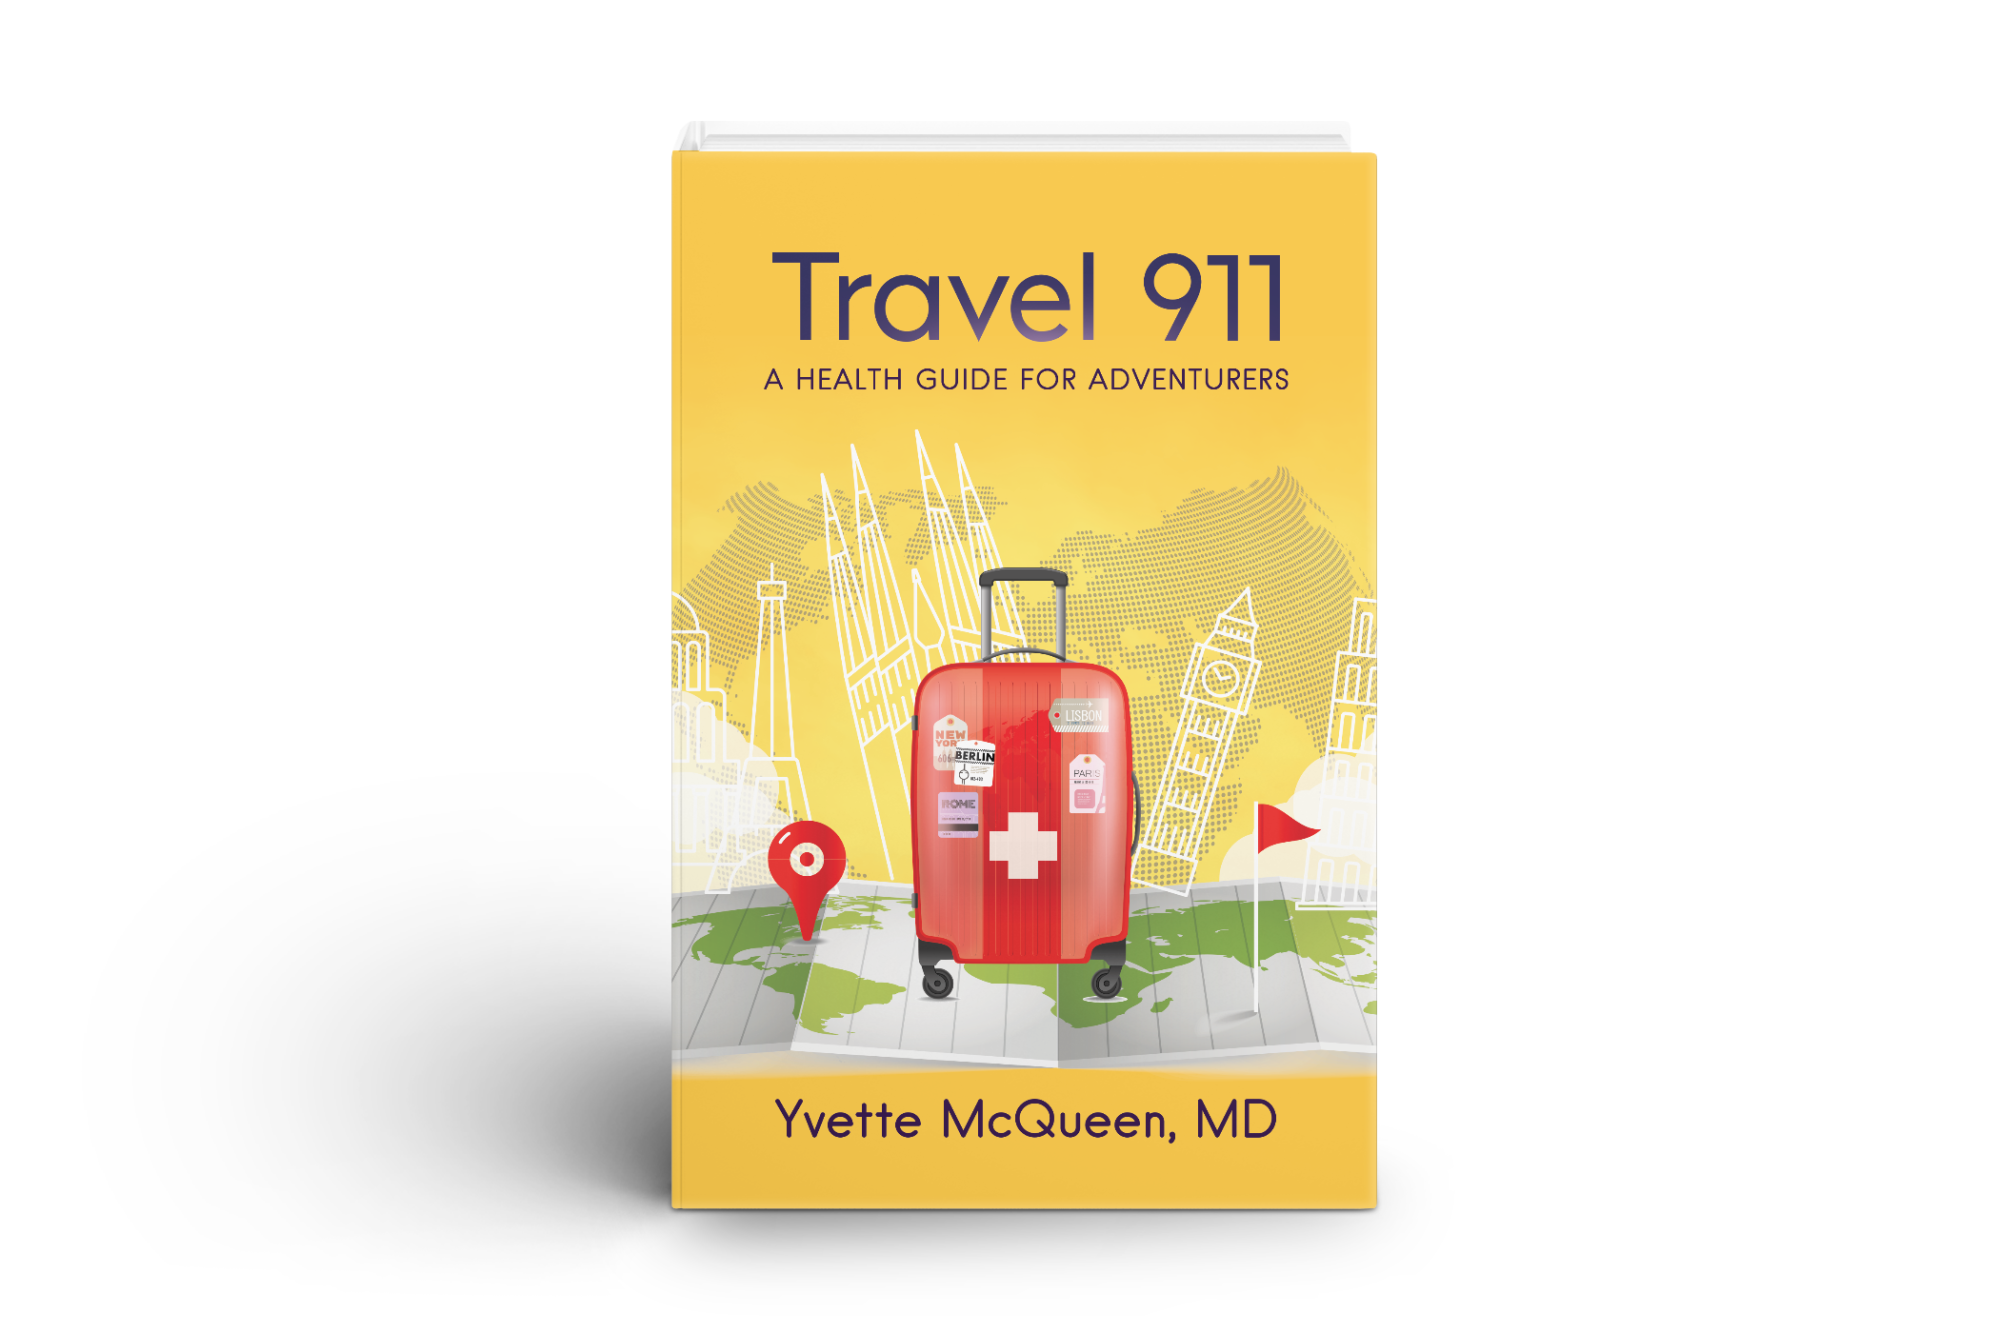 Travel 911 Book by Yvette McQueen